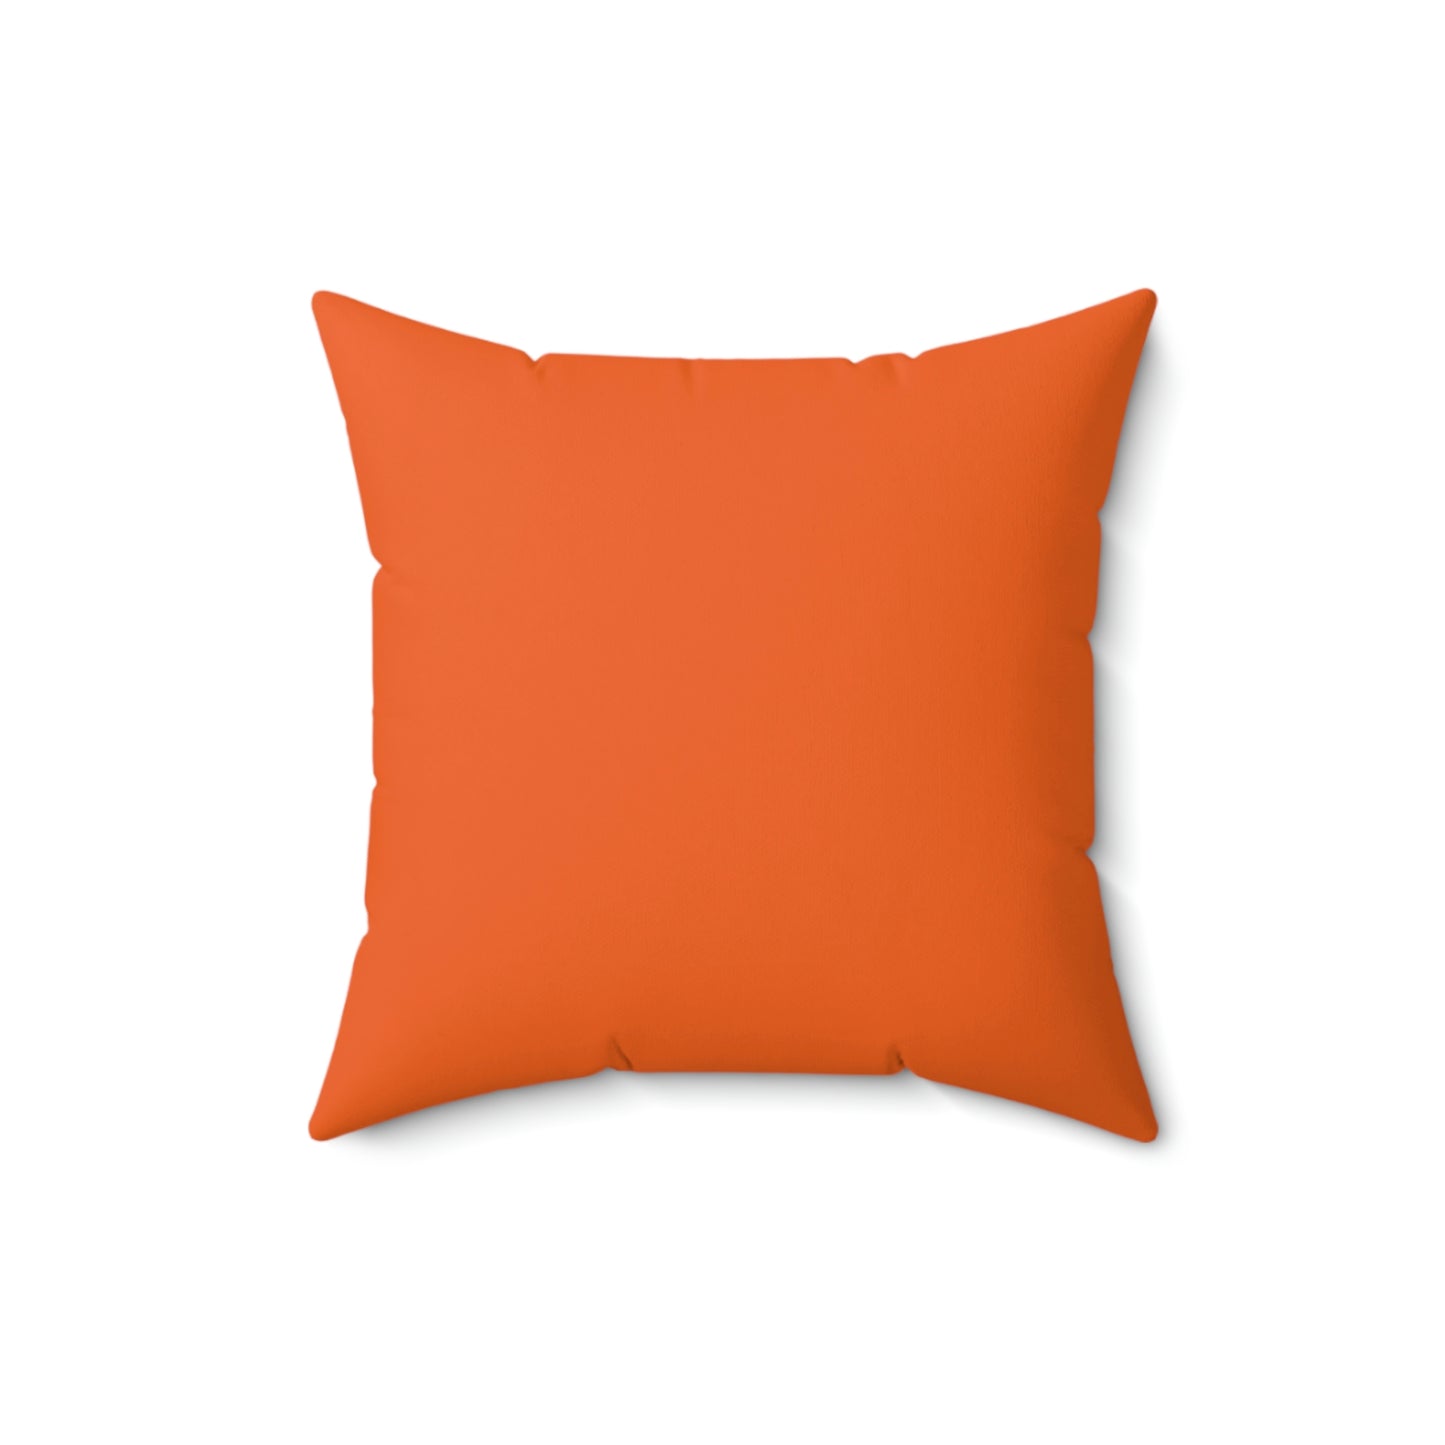 Spun Polyester Square Pillow Case "Cassettes on Orange”